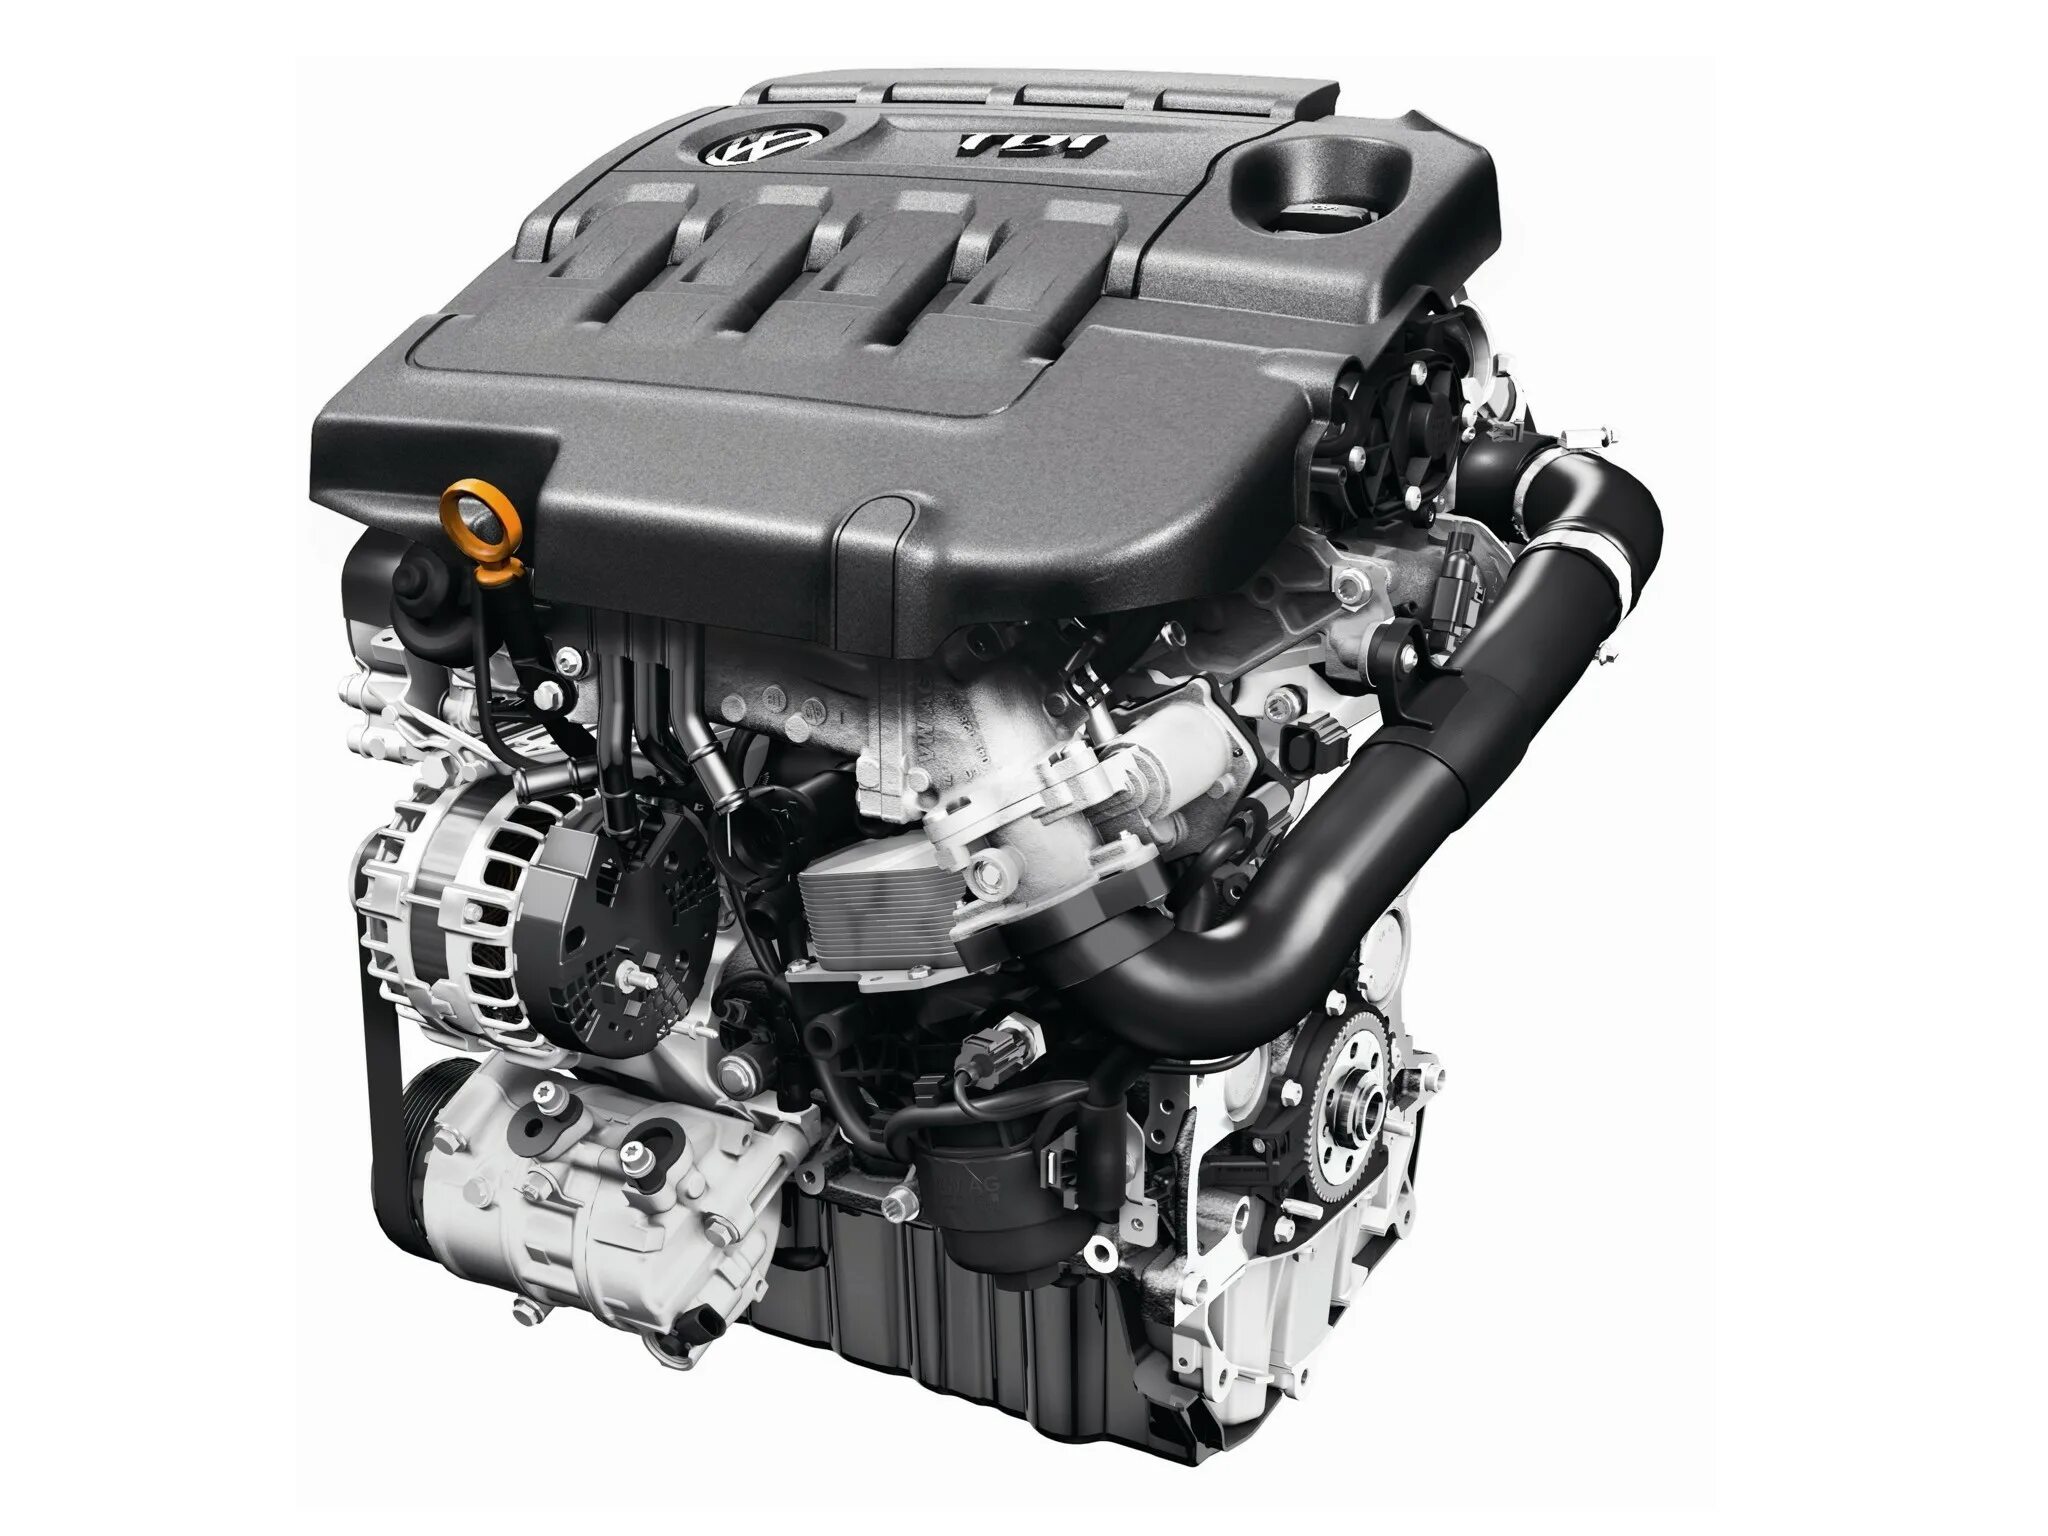 Двигатель VW 2.0 TDI. Двигатель ea288 150 л.с 2.0 TDI. Фольксваген,2.0 дизель 140 л.с. 2.0 TDI 140 Л.С дизель.